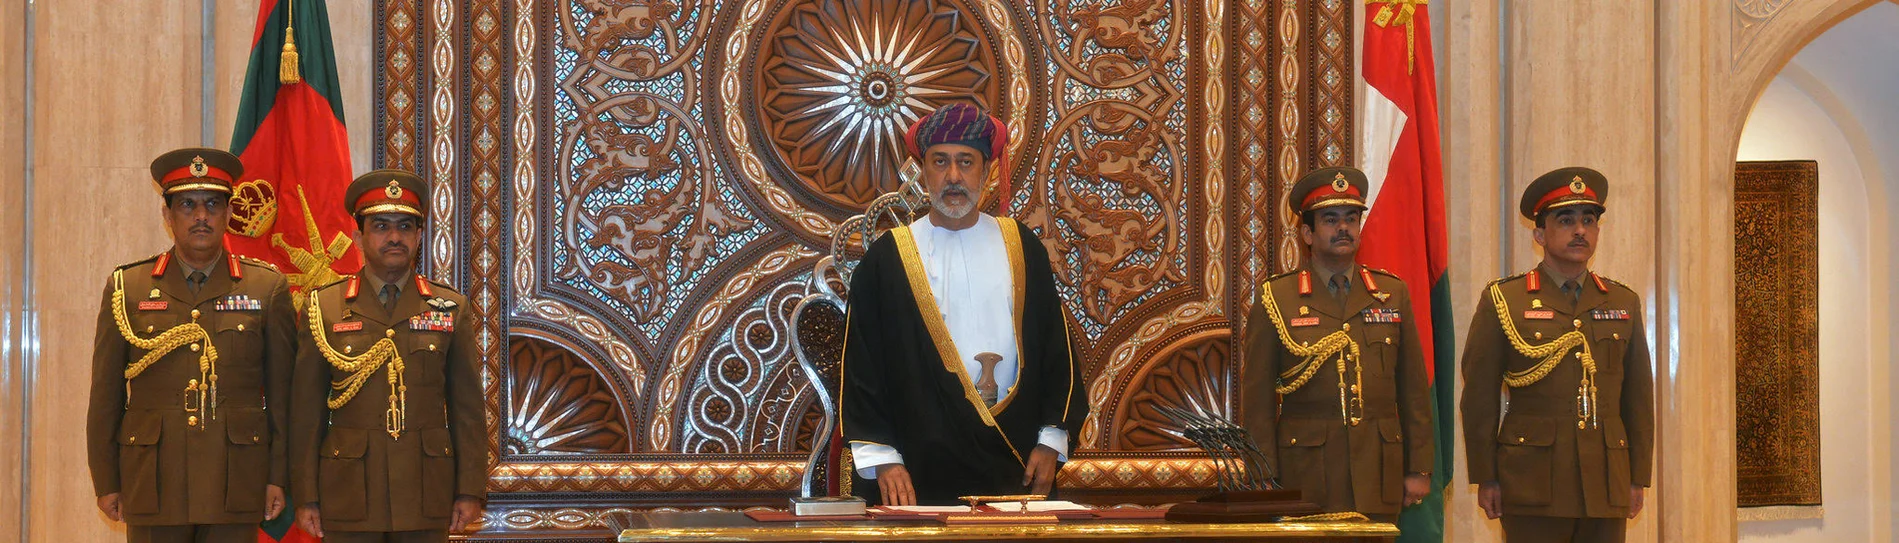 Succession in Oman and the Emergence of Sultan Haitham bin Tariq